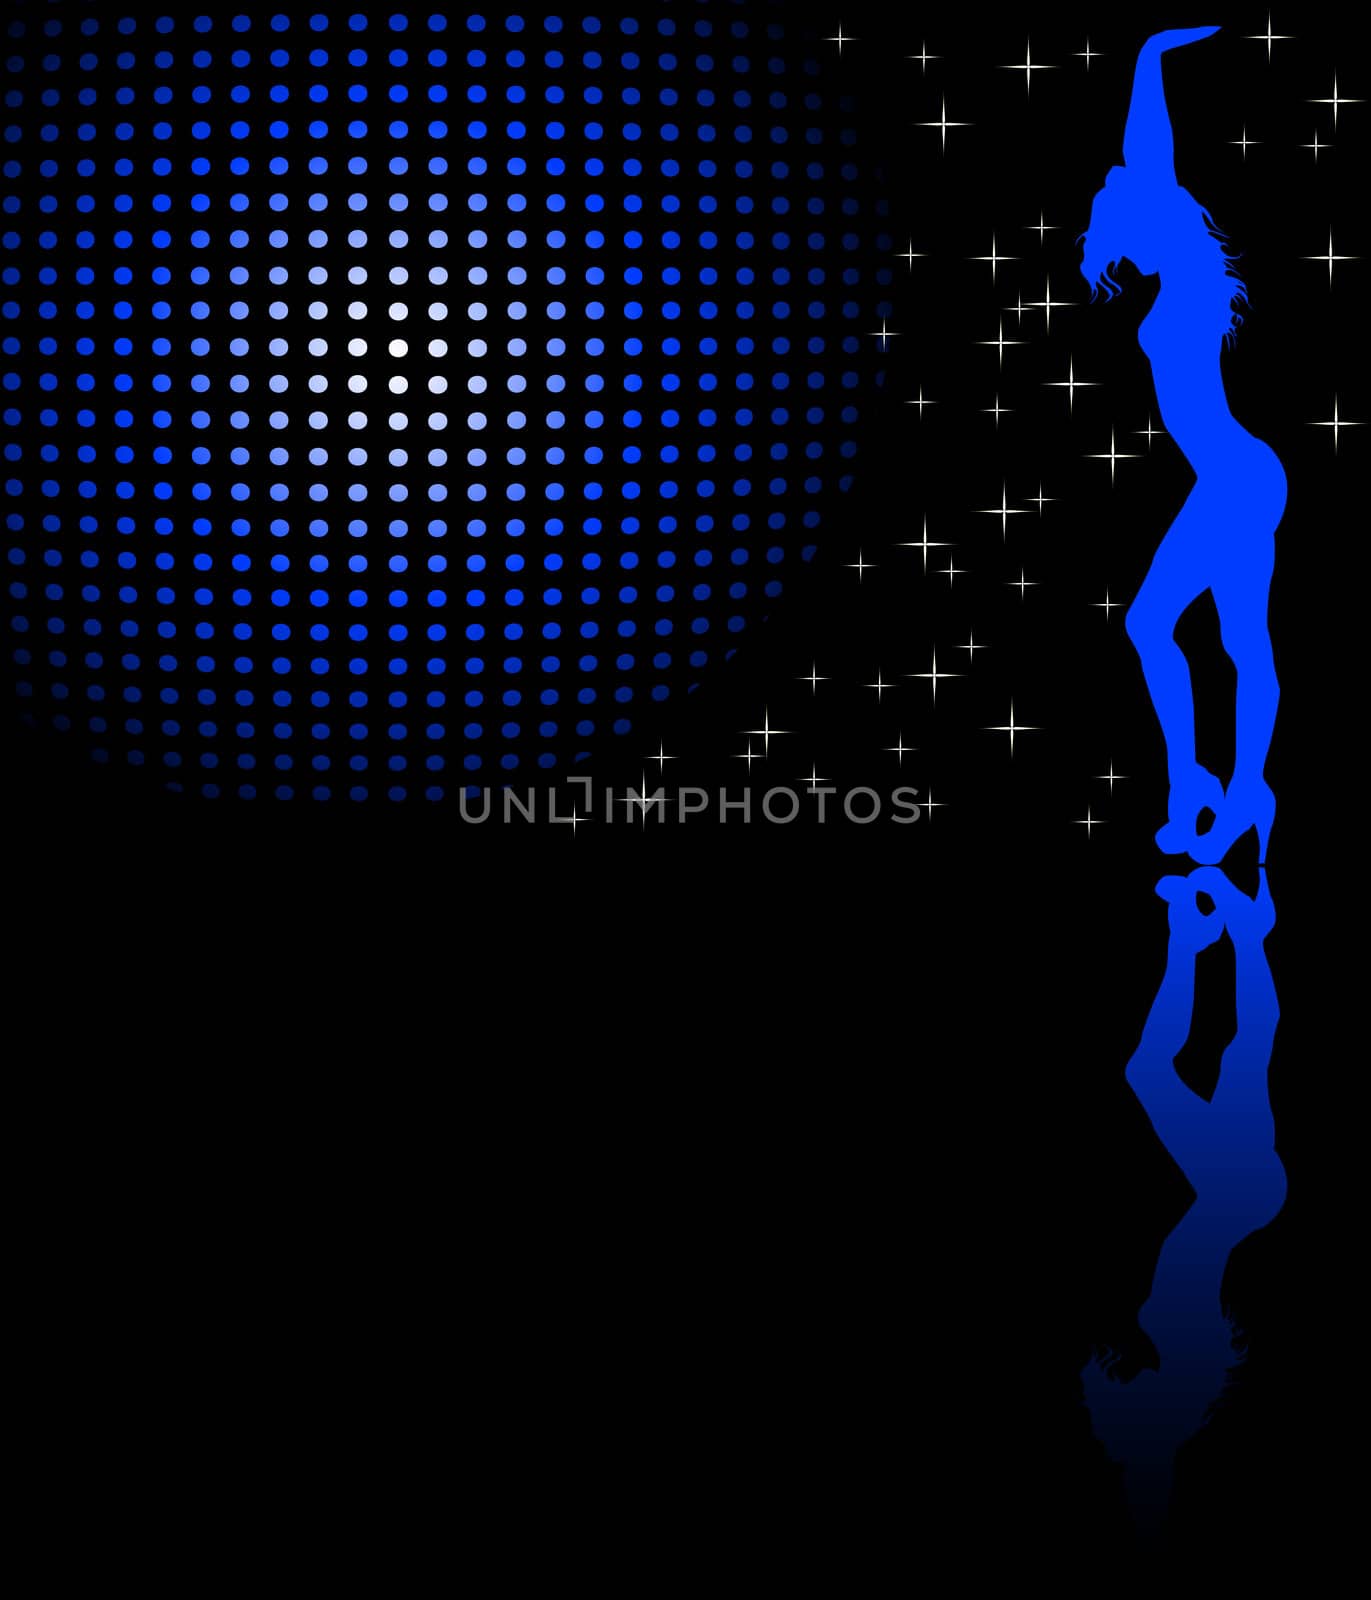 disco background by Lirch